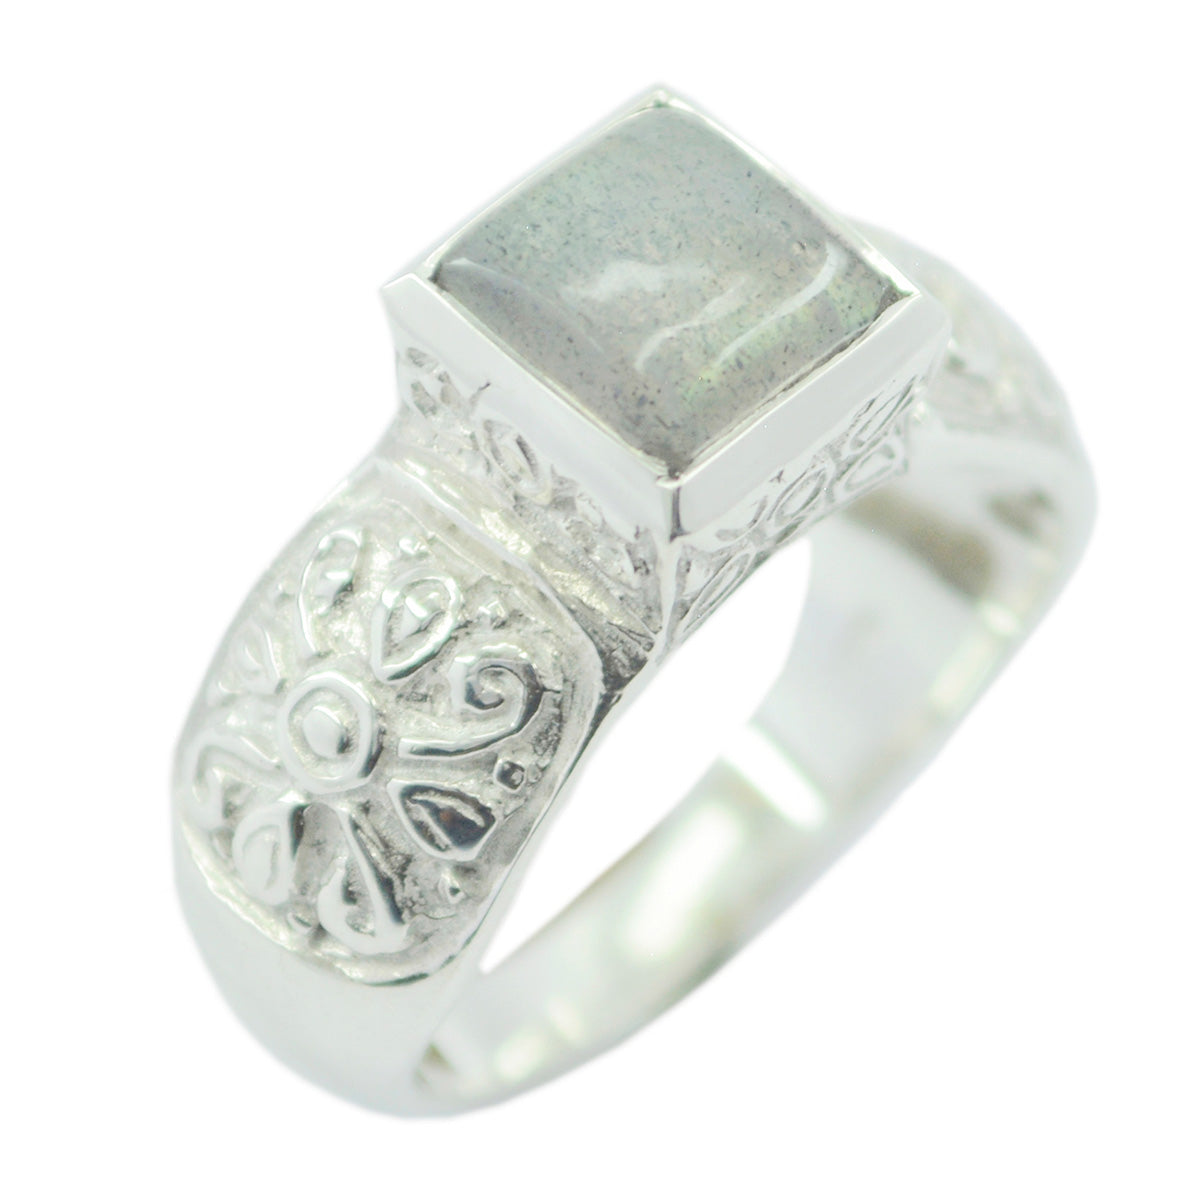 Engaging Gemstone Labradorite 925 Silver Rings Premier Designs Jewelry